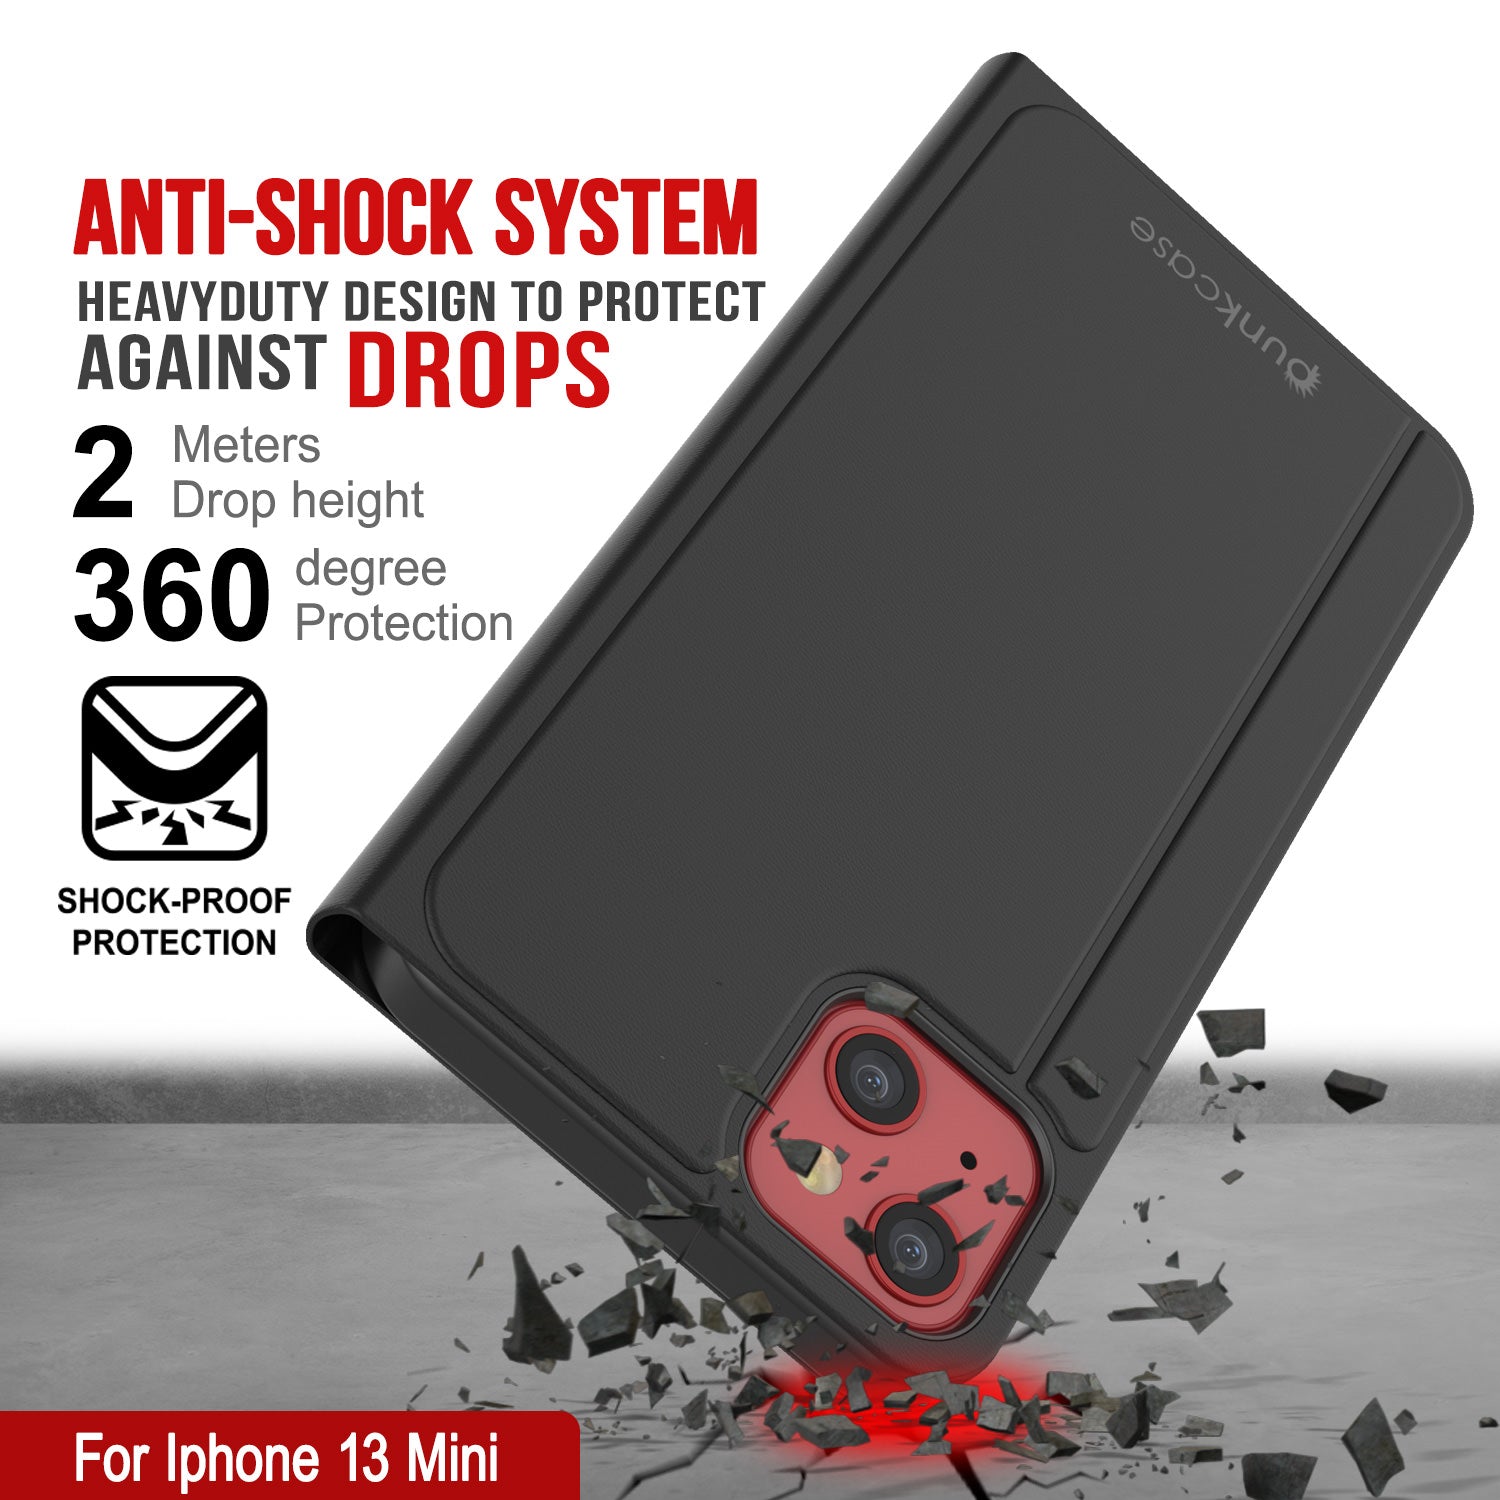 Punkcase iPhone 14 Plus Reflector Case Protective Flip Cover [Rose] –  punkcase